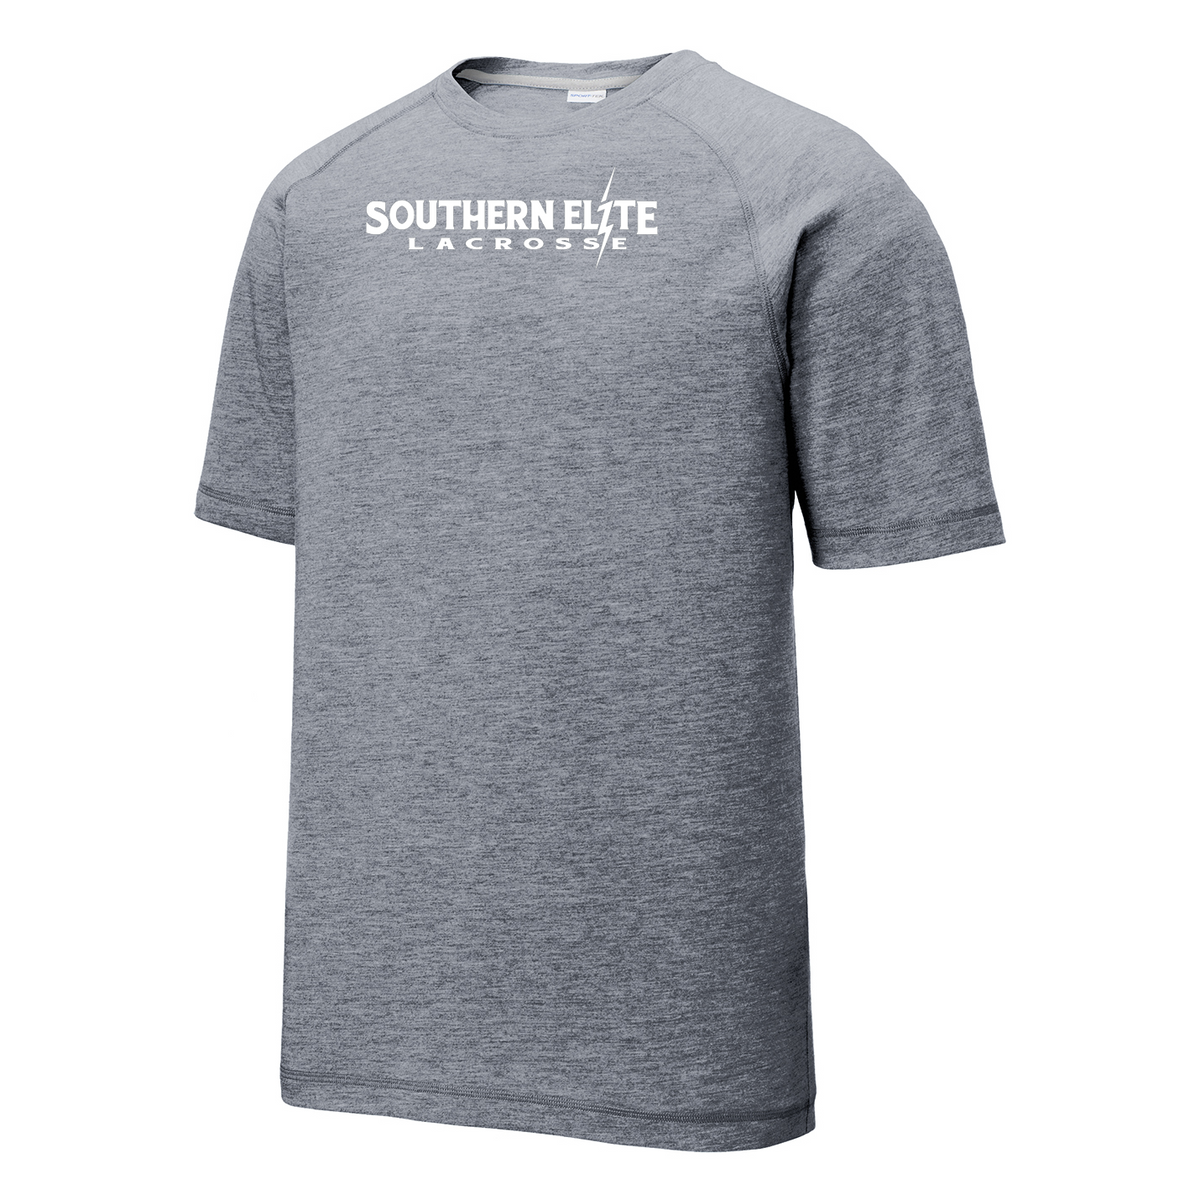 Southern Elite Lacrosse  Raglan CottonTouch Tee